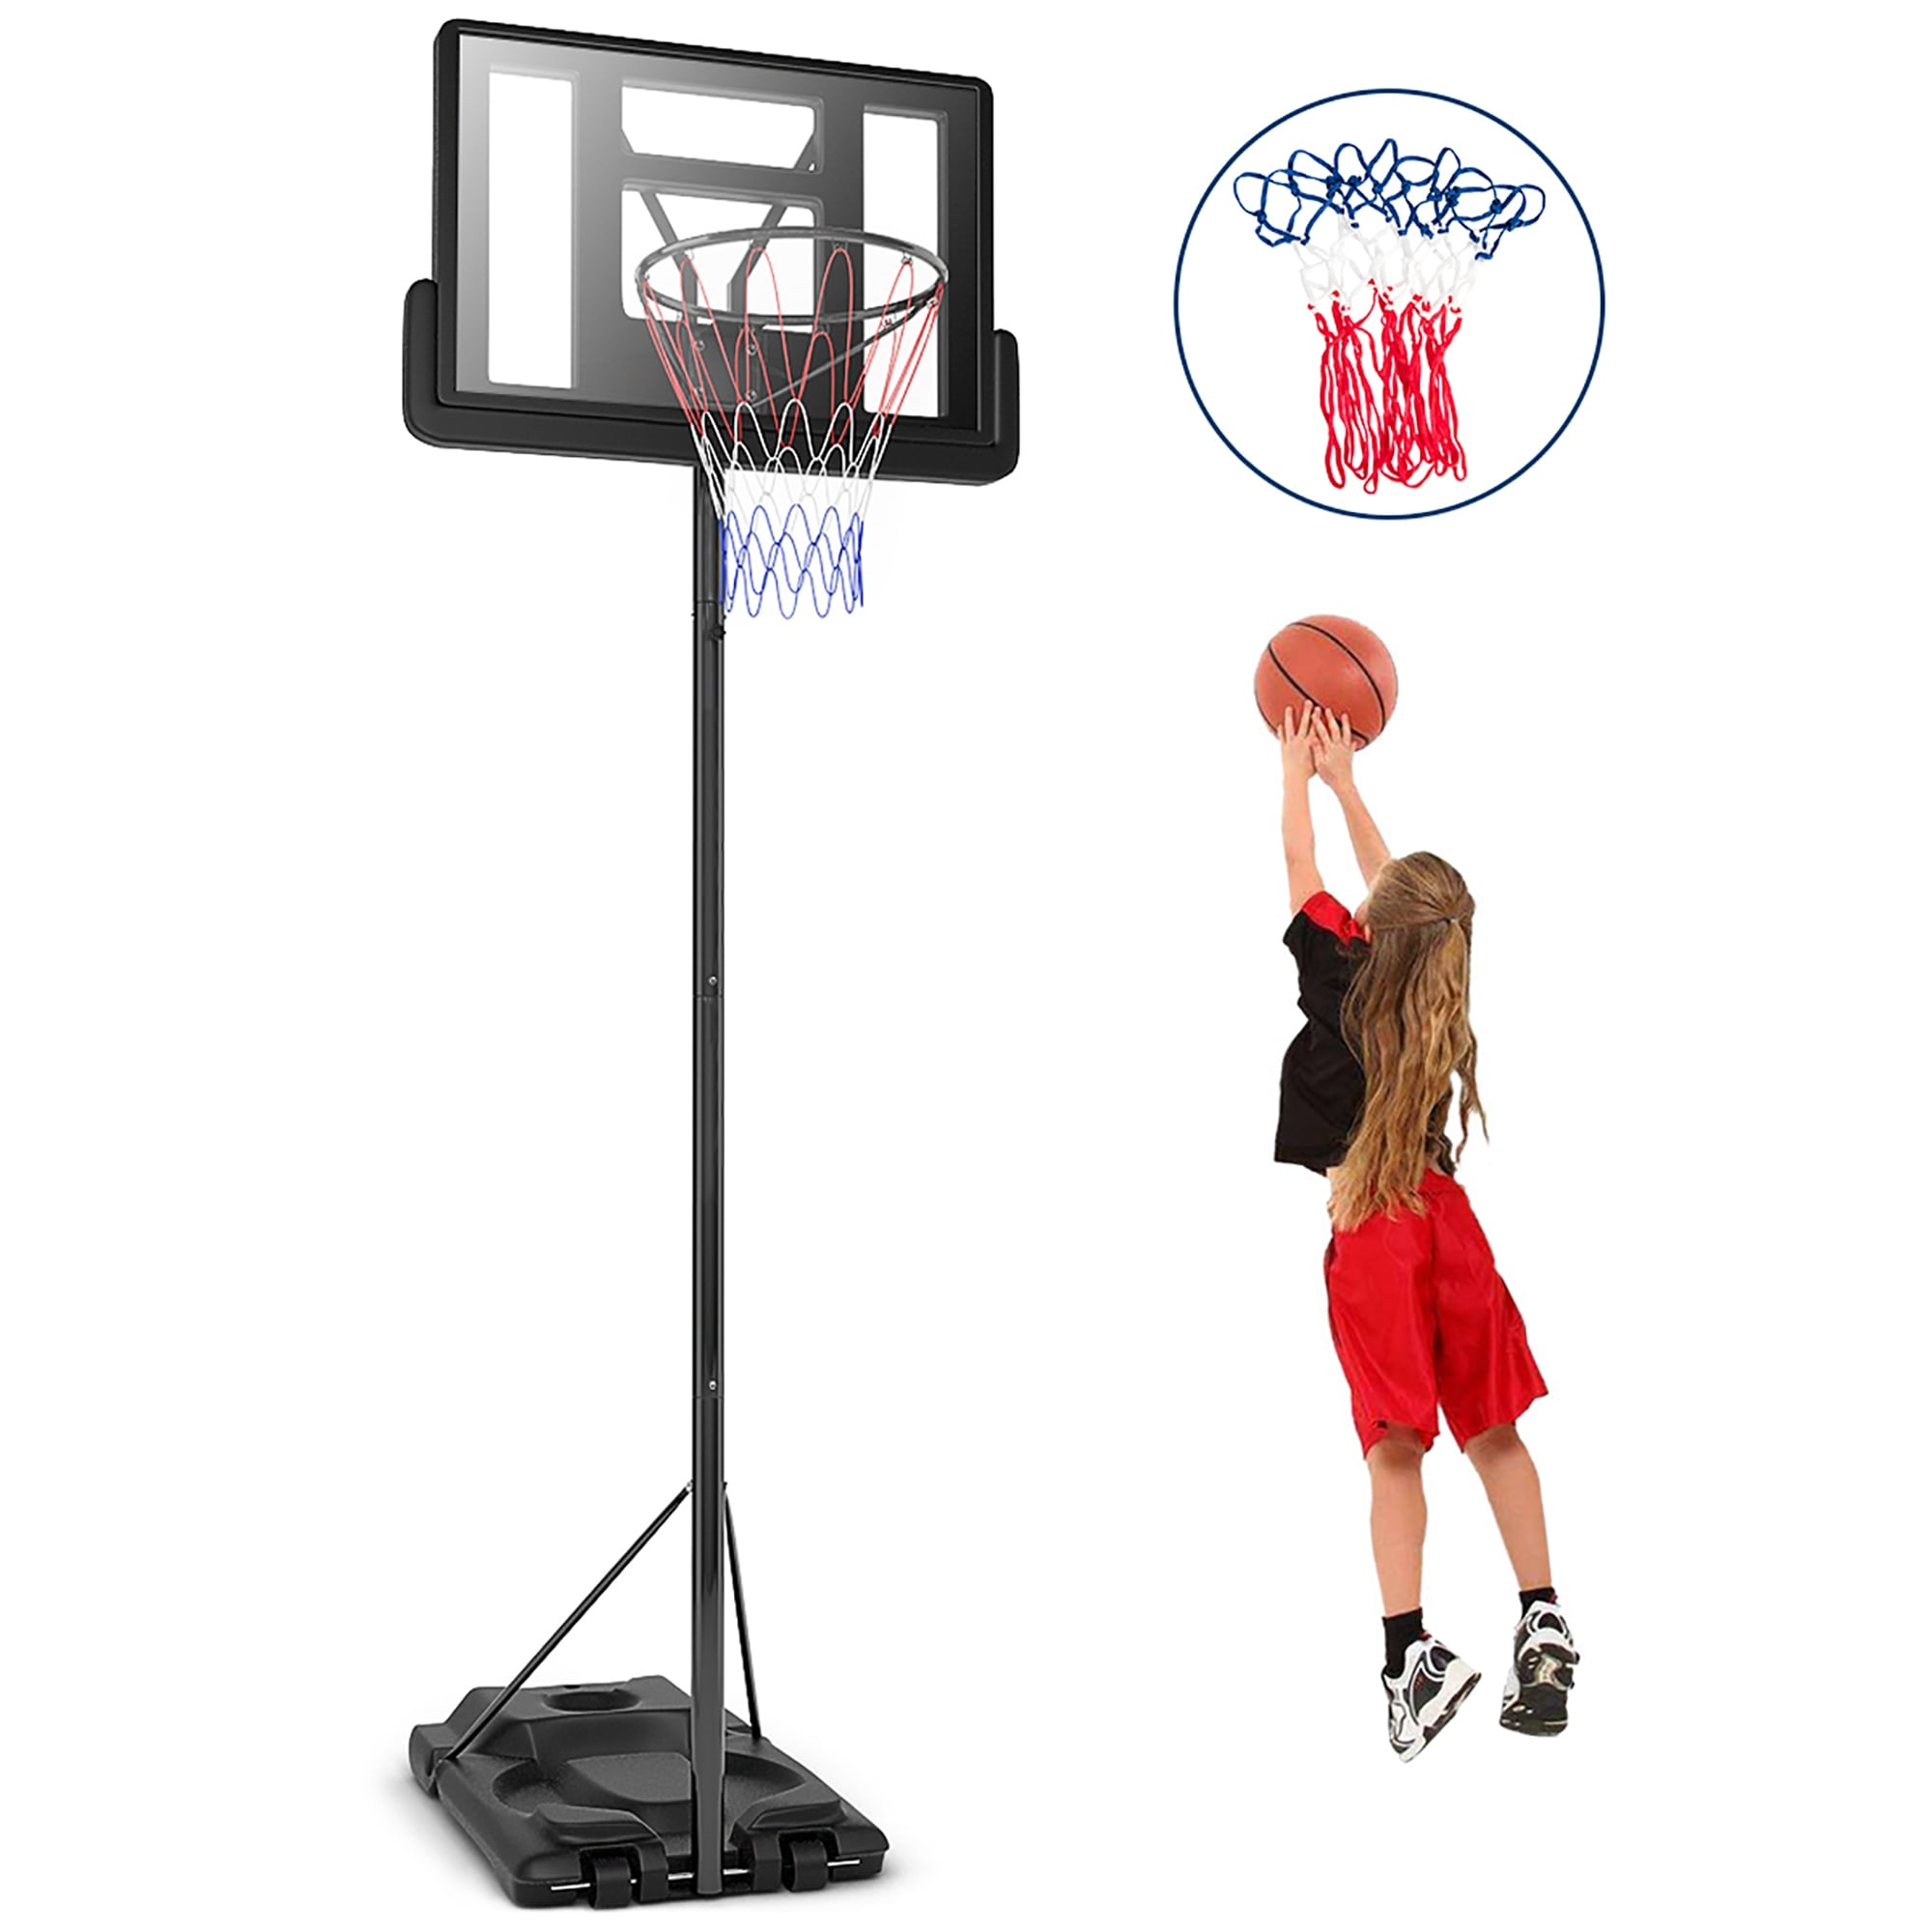 Soozier Wall Mounted Basketball Hoop with Shatter Proof Backboard, Black